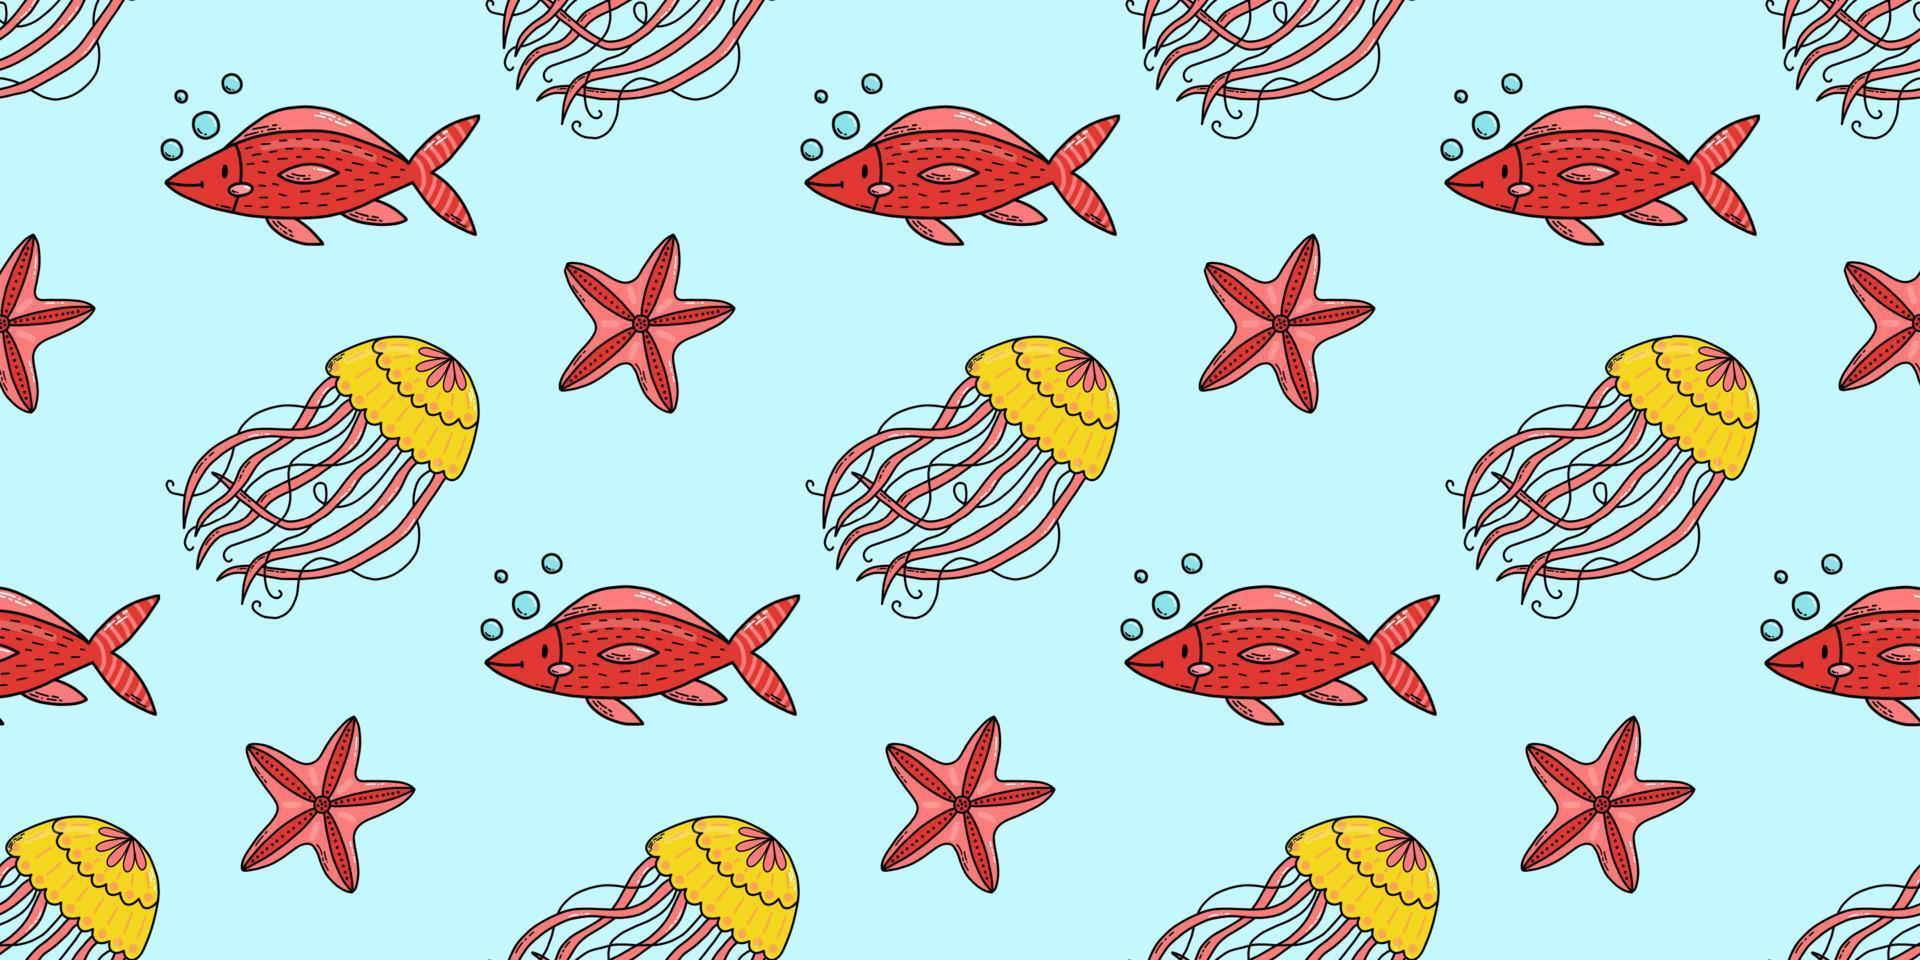 Seamless pattern with cute doodle cartoon sea animals. Vector illustration.